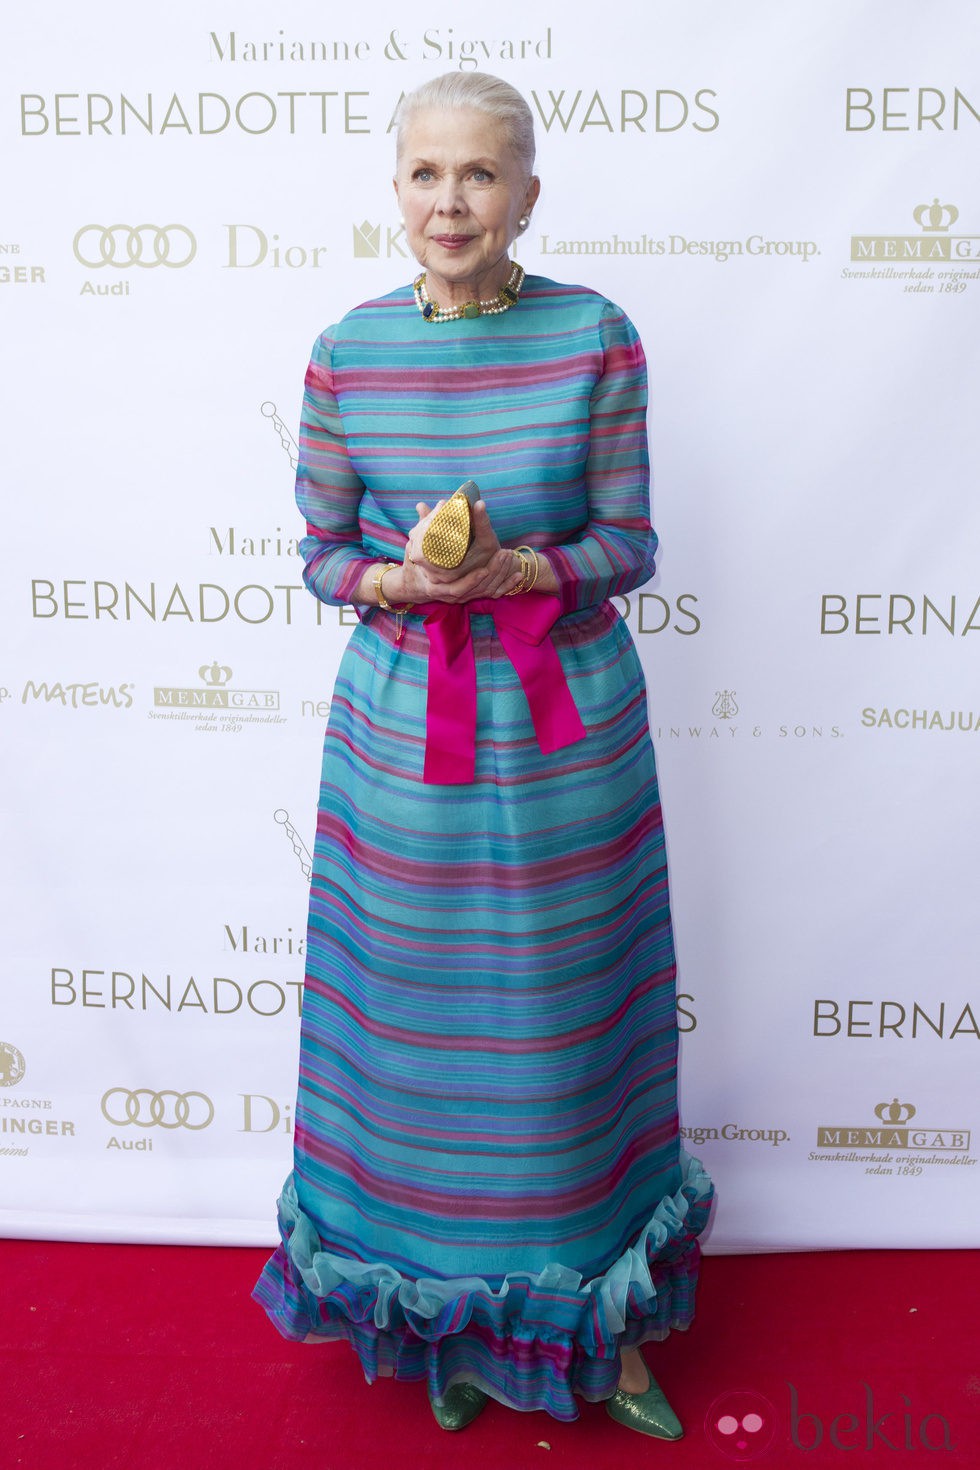 La Duquesa de Orleans en los Premios Marianne & Sigvard Bernadotte